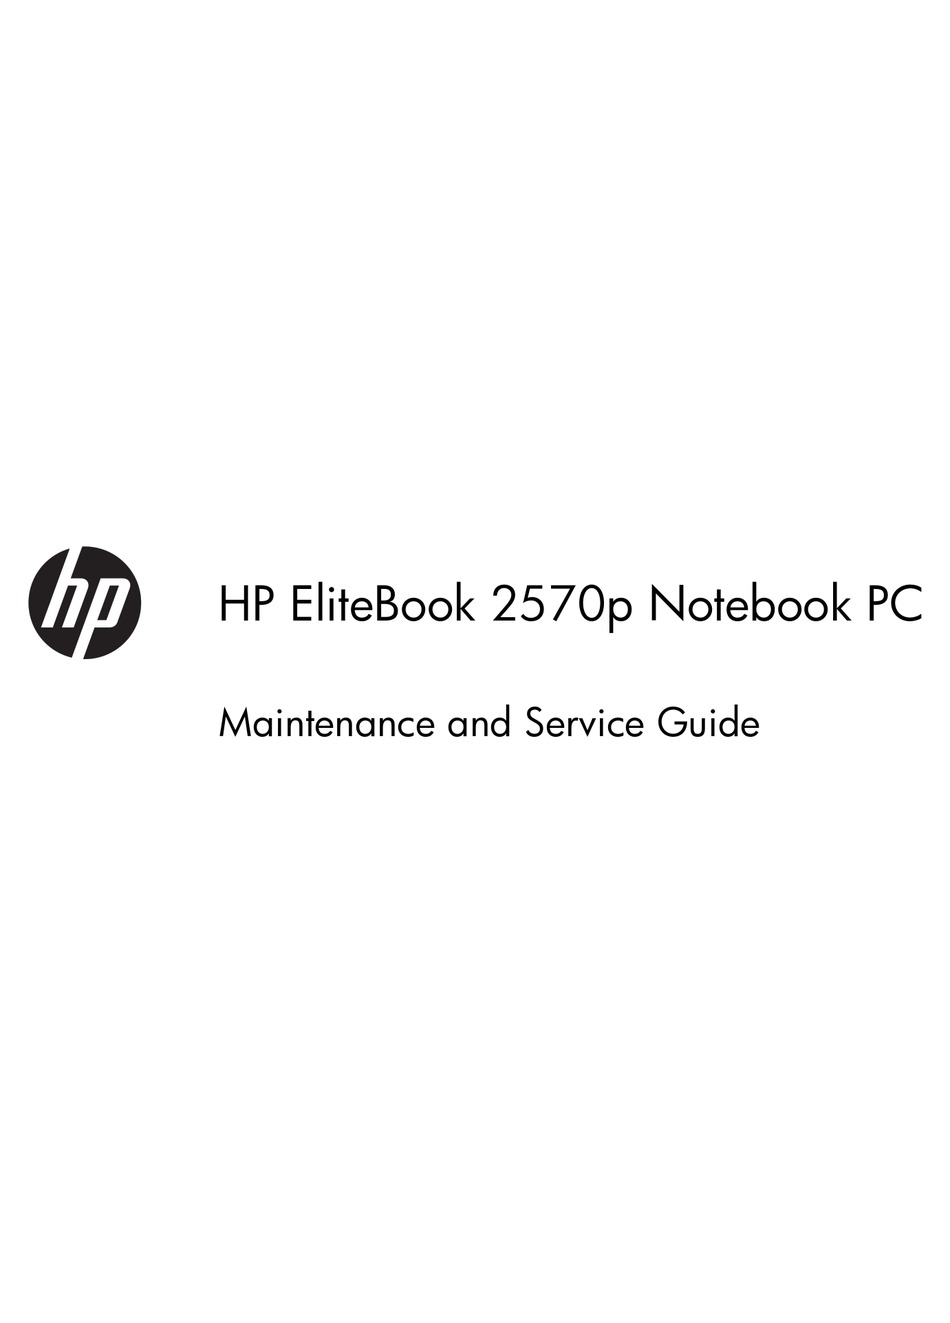 hp elitebook 2560p graphics drivers